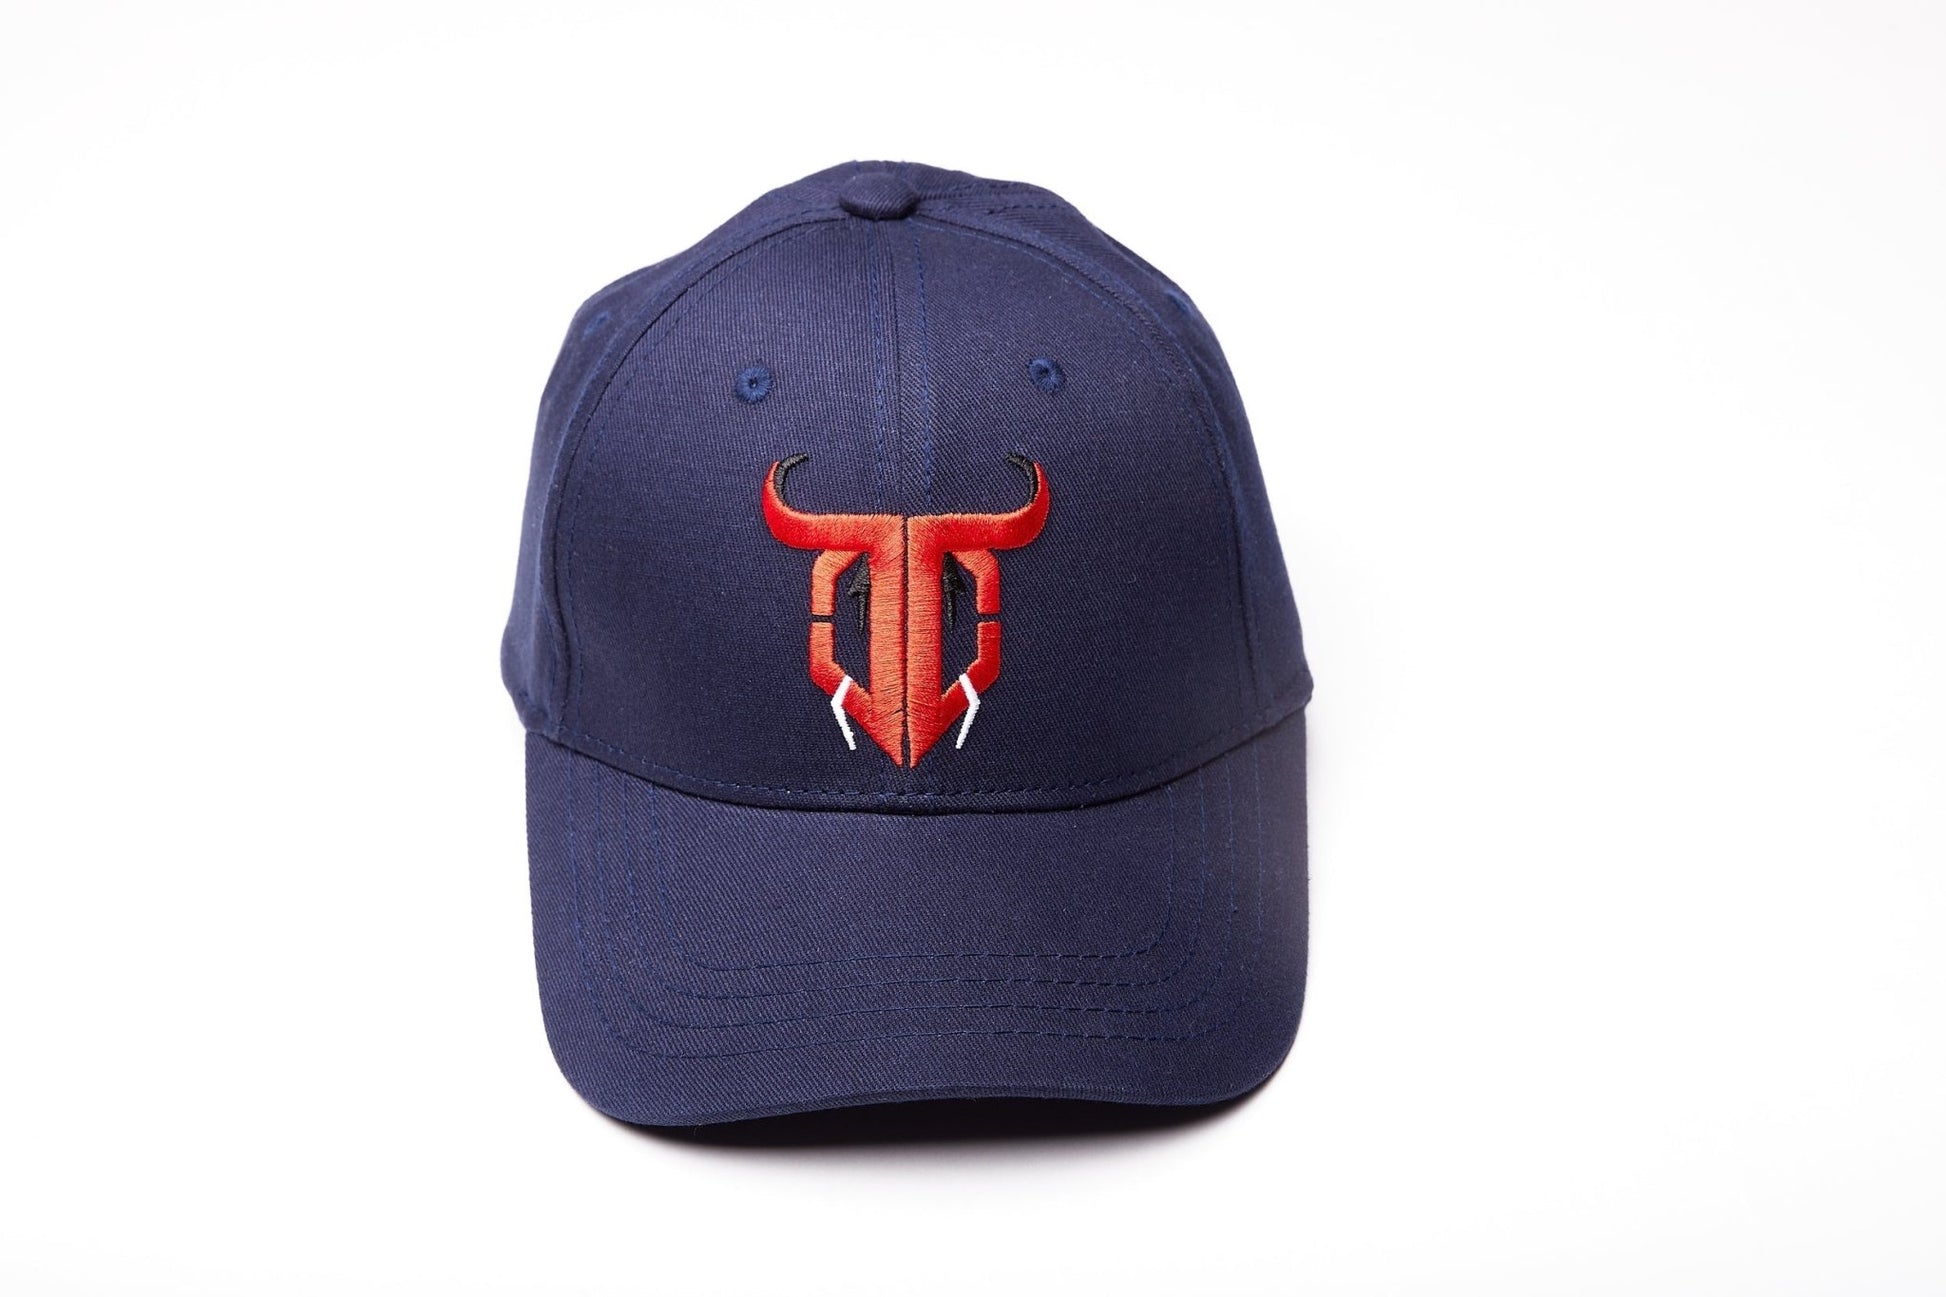 Go Devil Logo Printed Navy Blue Cap - Go Devil